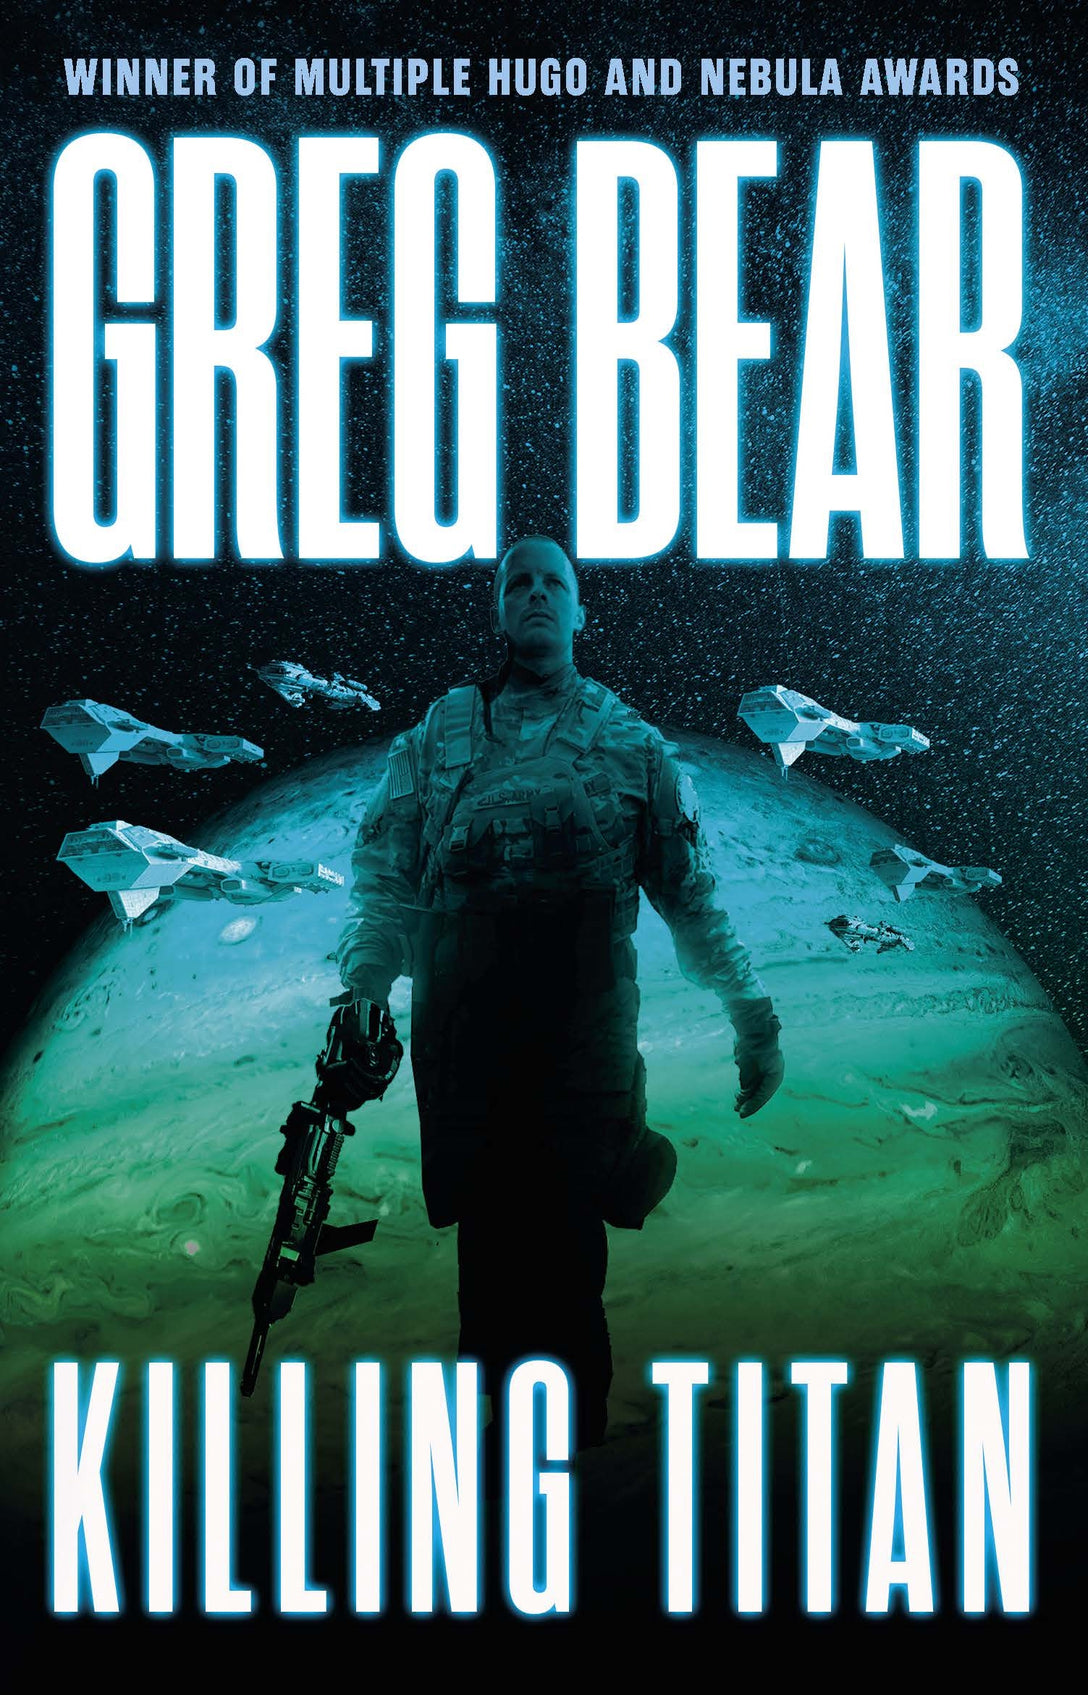 Killing Titan by Greg Bear